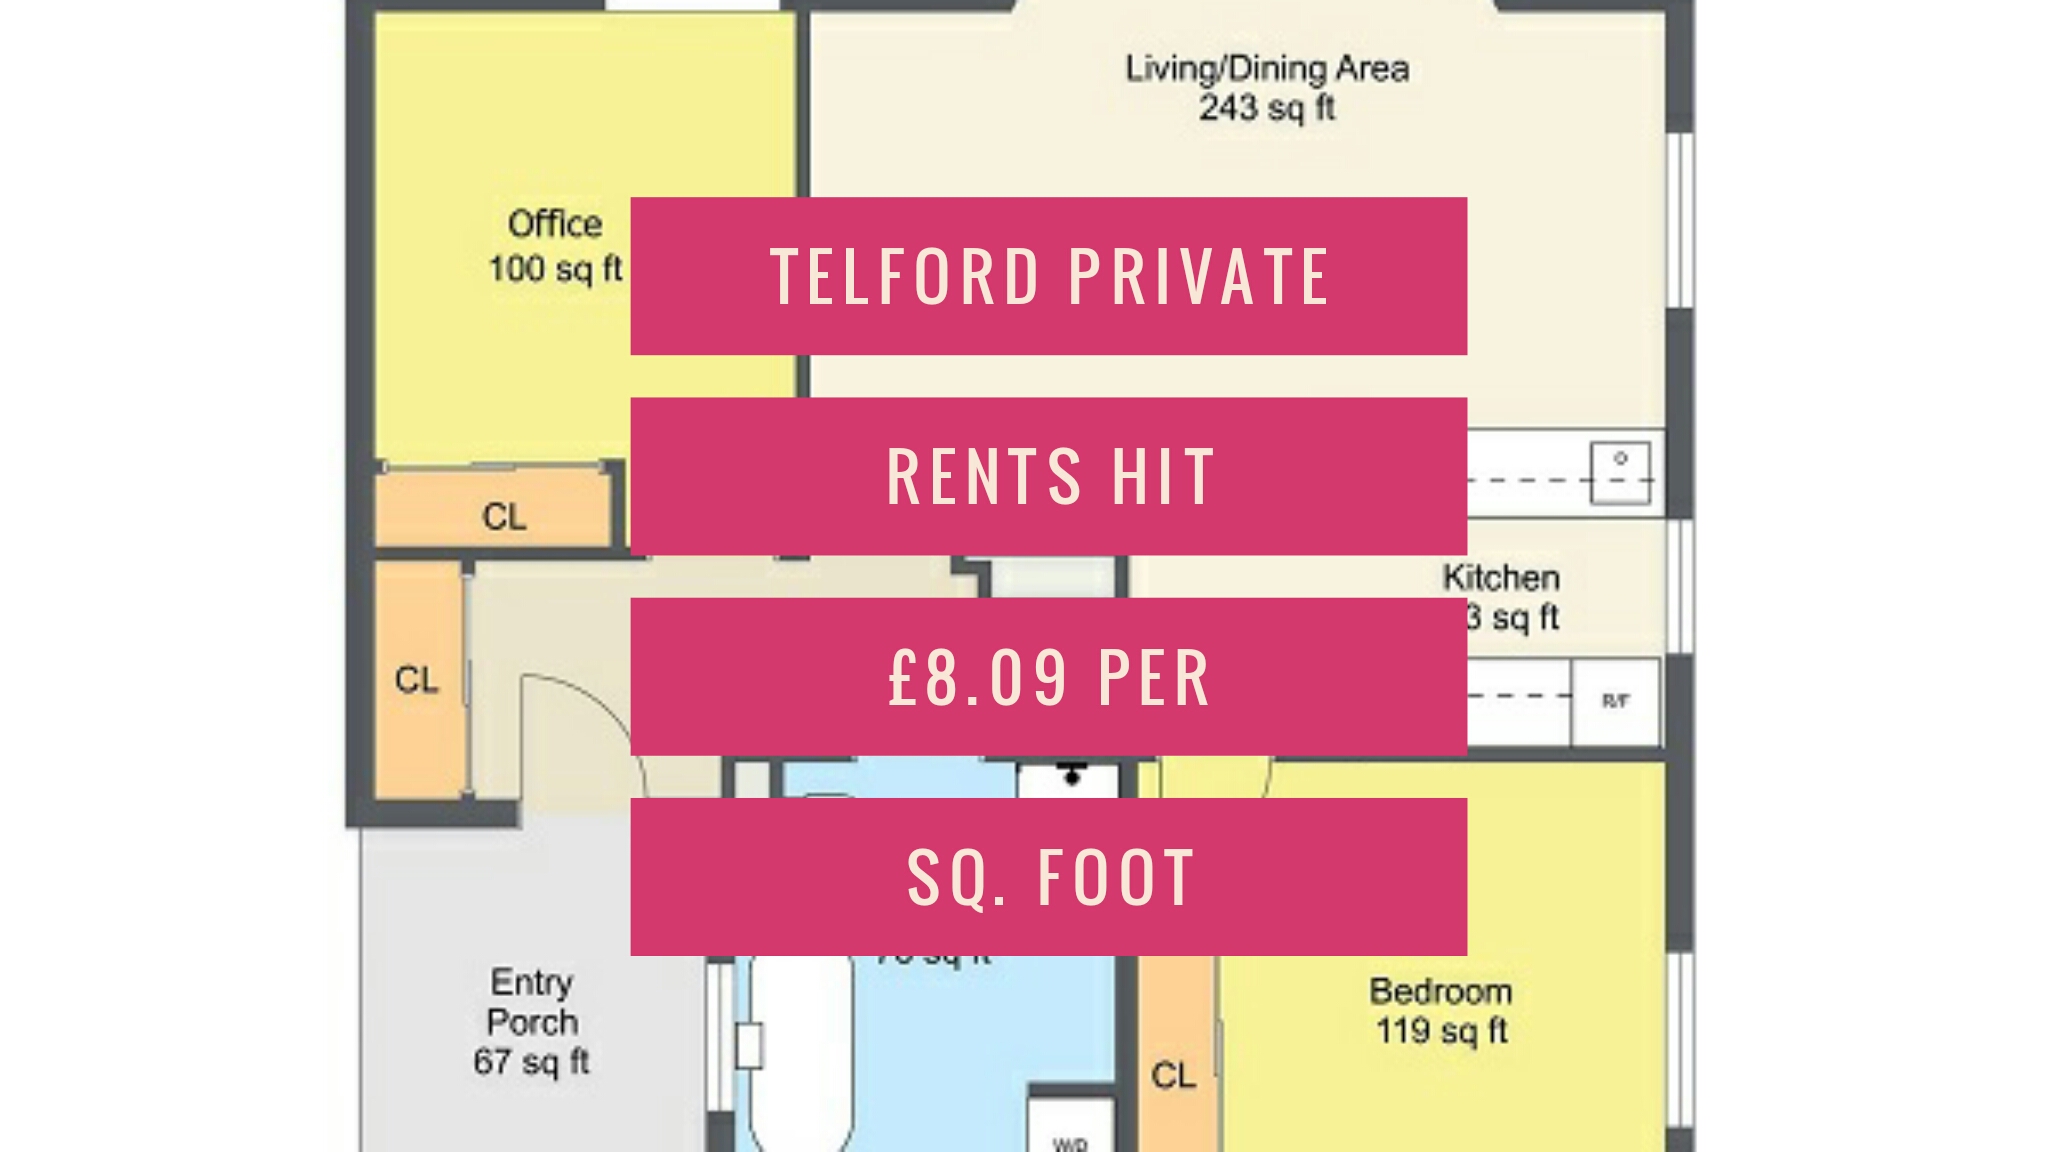 Telford Private Rents Hit £8.09 per sq. foot